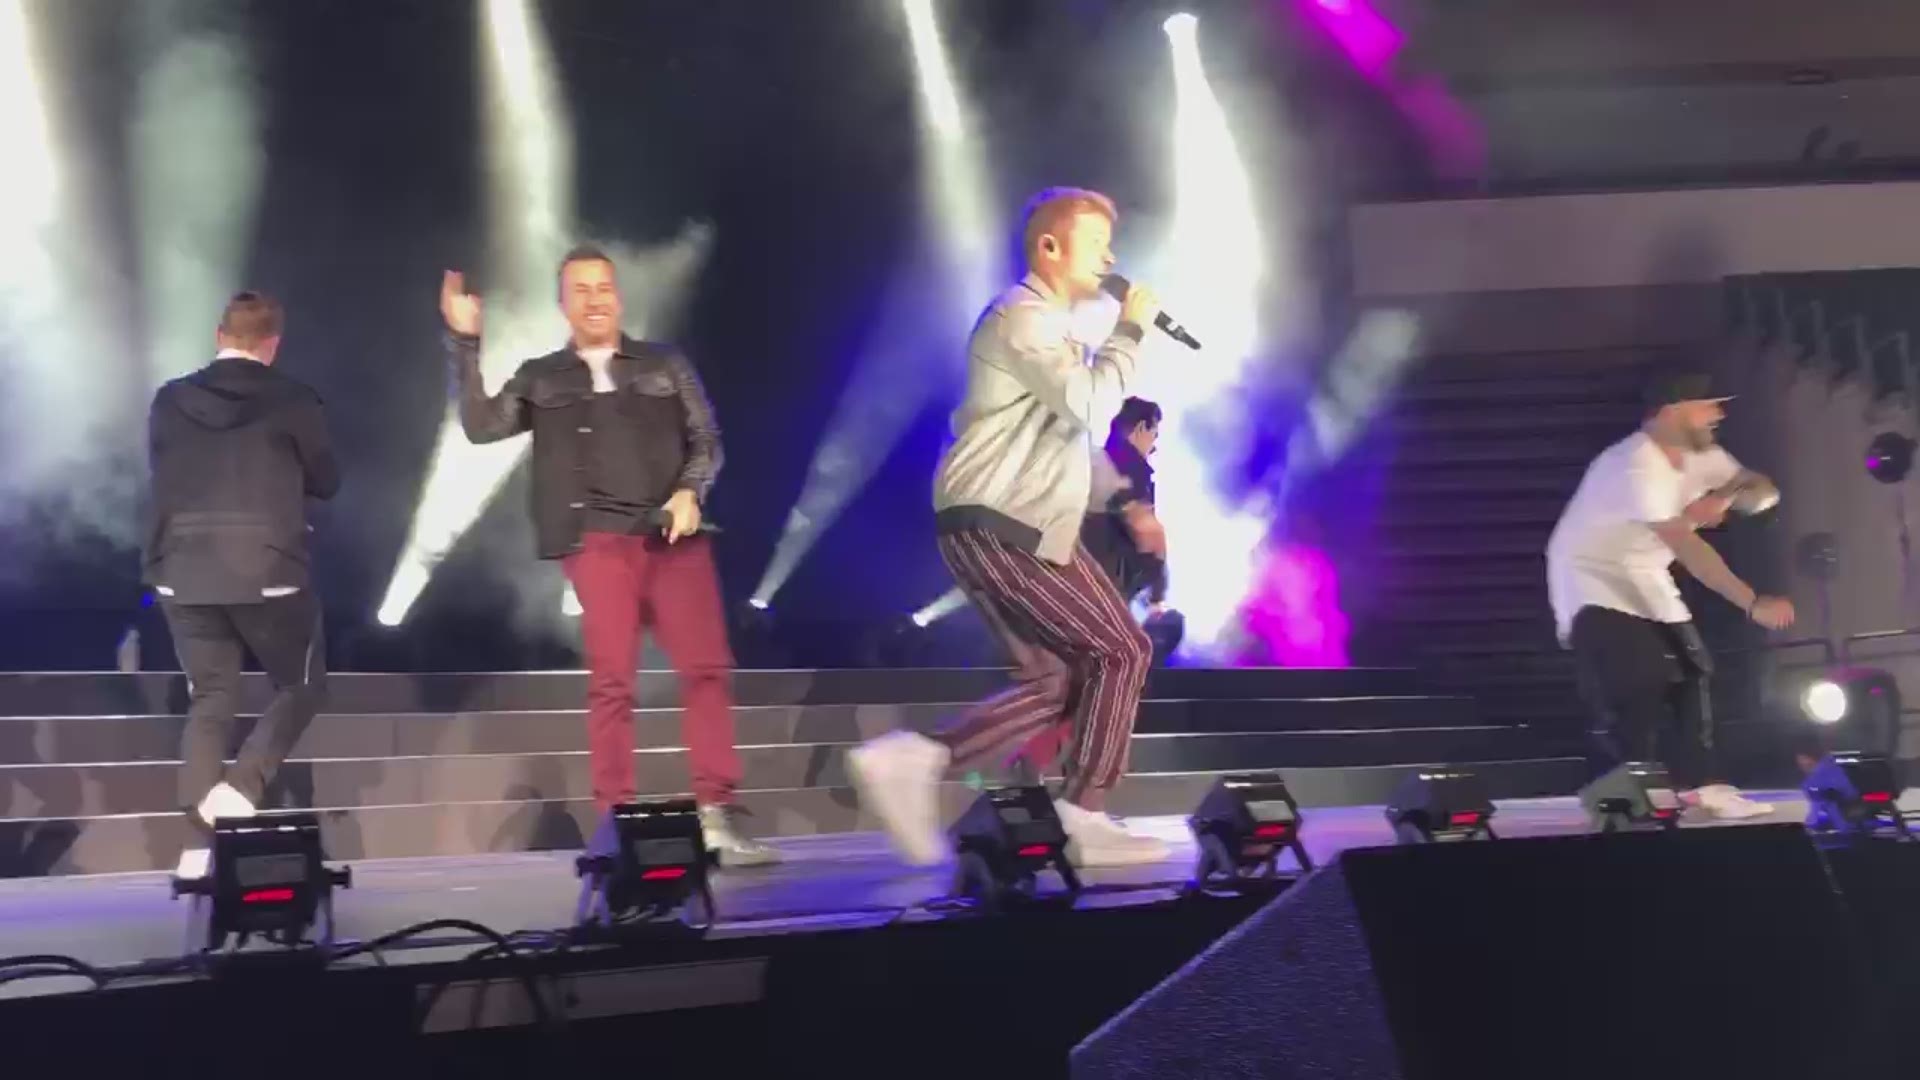 The Backstreet Boys performed in Cedar Park on Dec. 16, 2018.